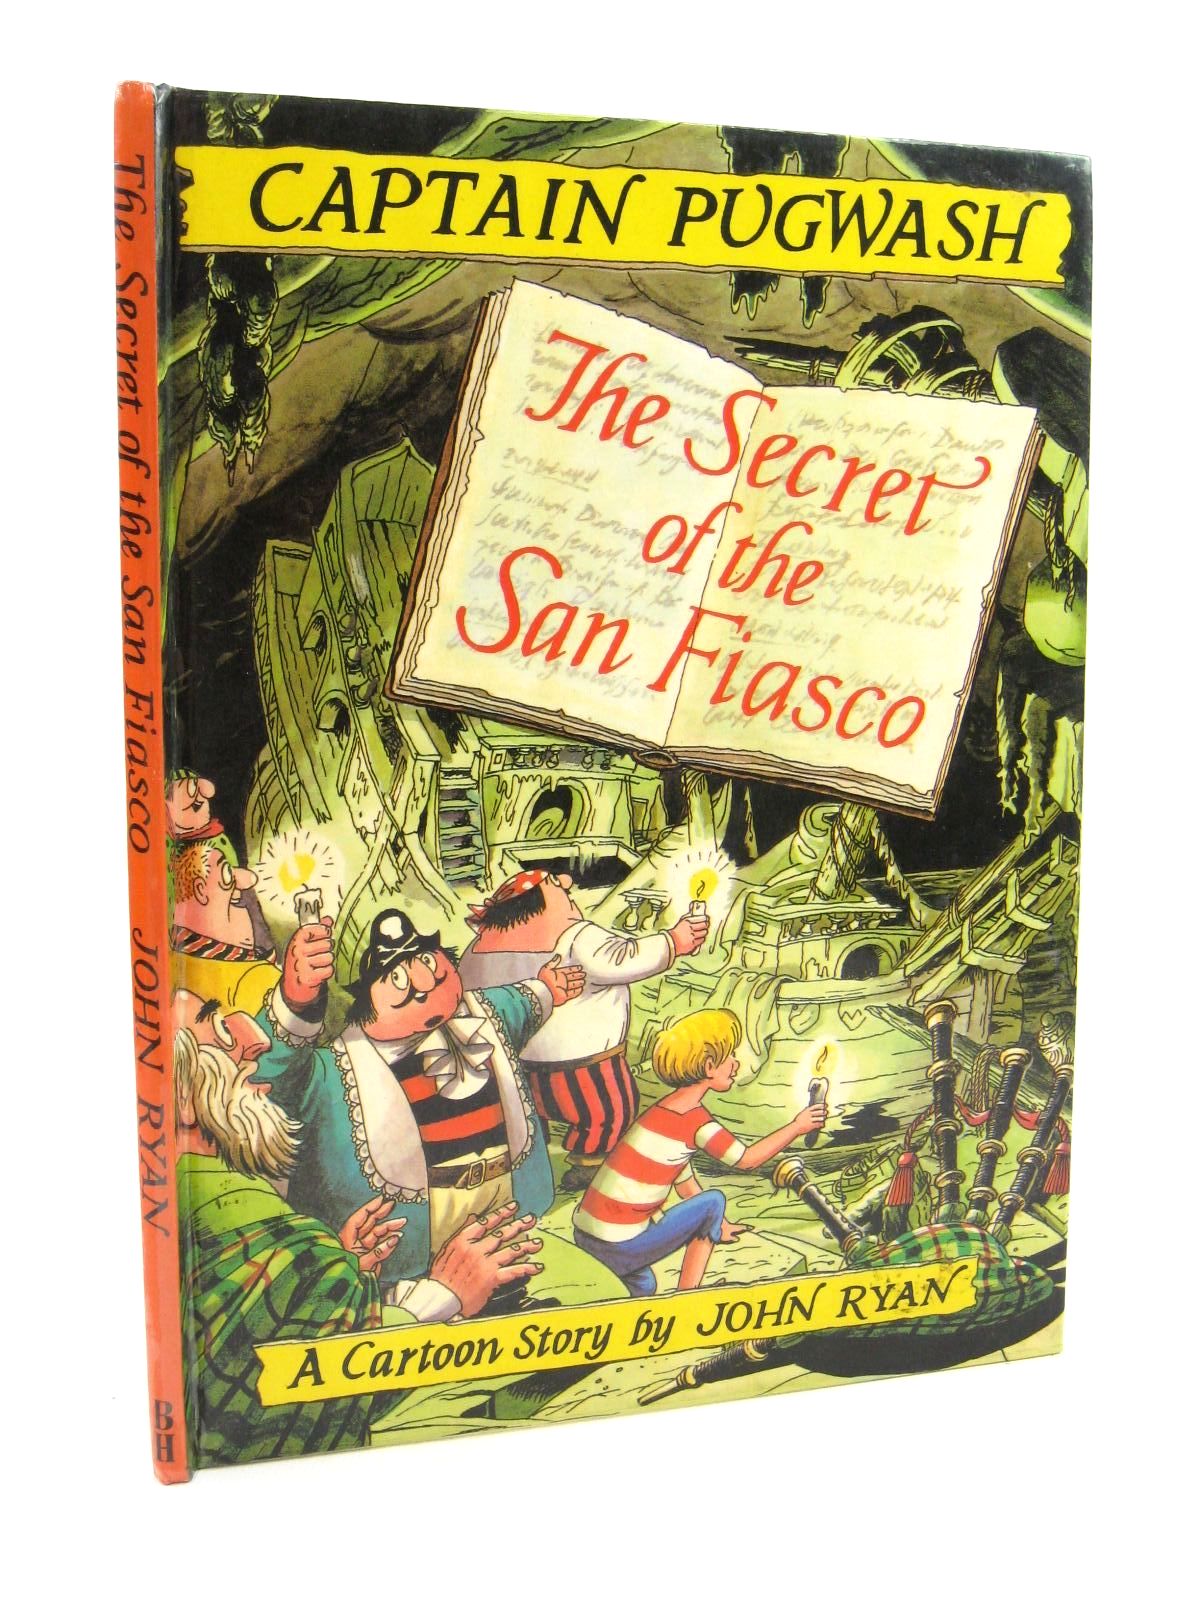 Cover of CAPTAIN PUGWASH - THE SECRET OF THE SAN FIASCO by John Ryan